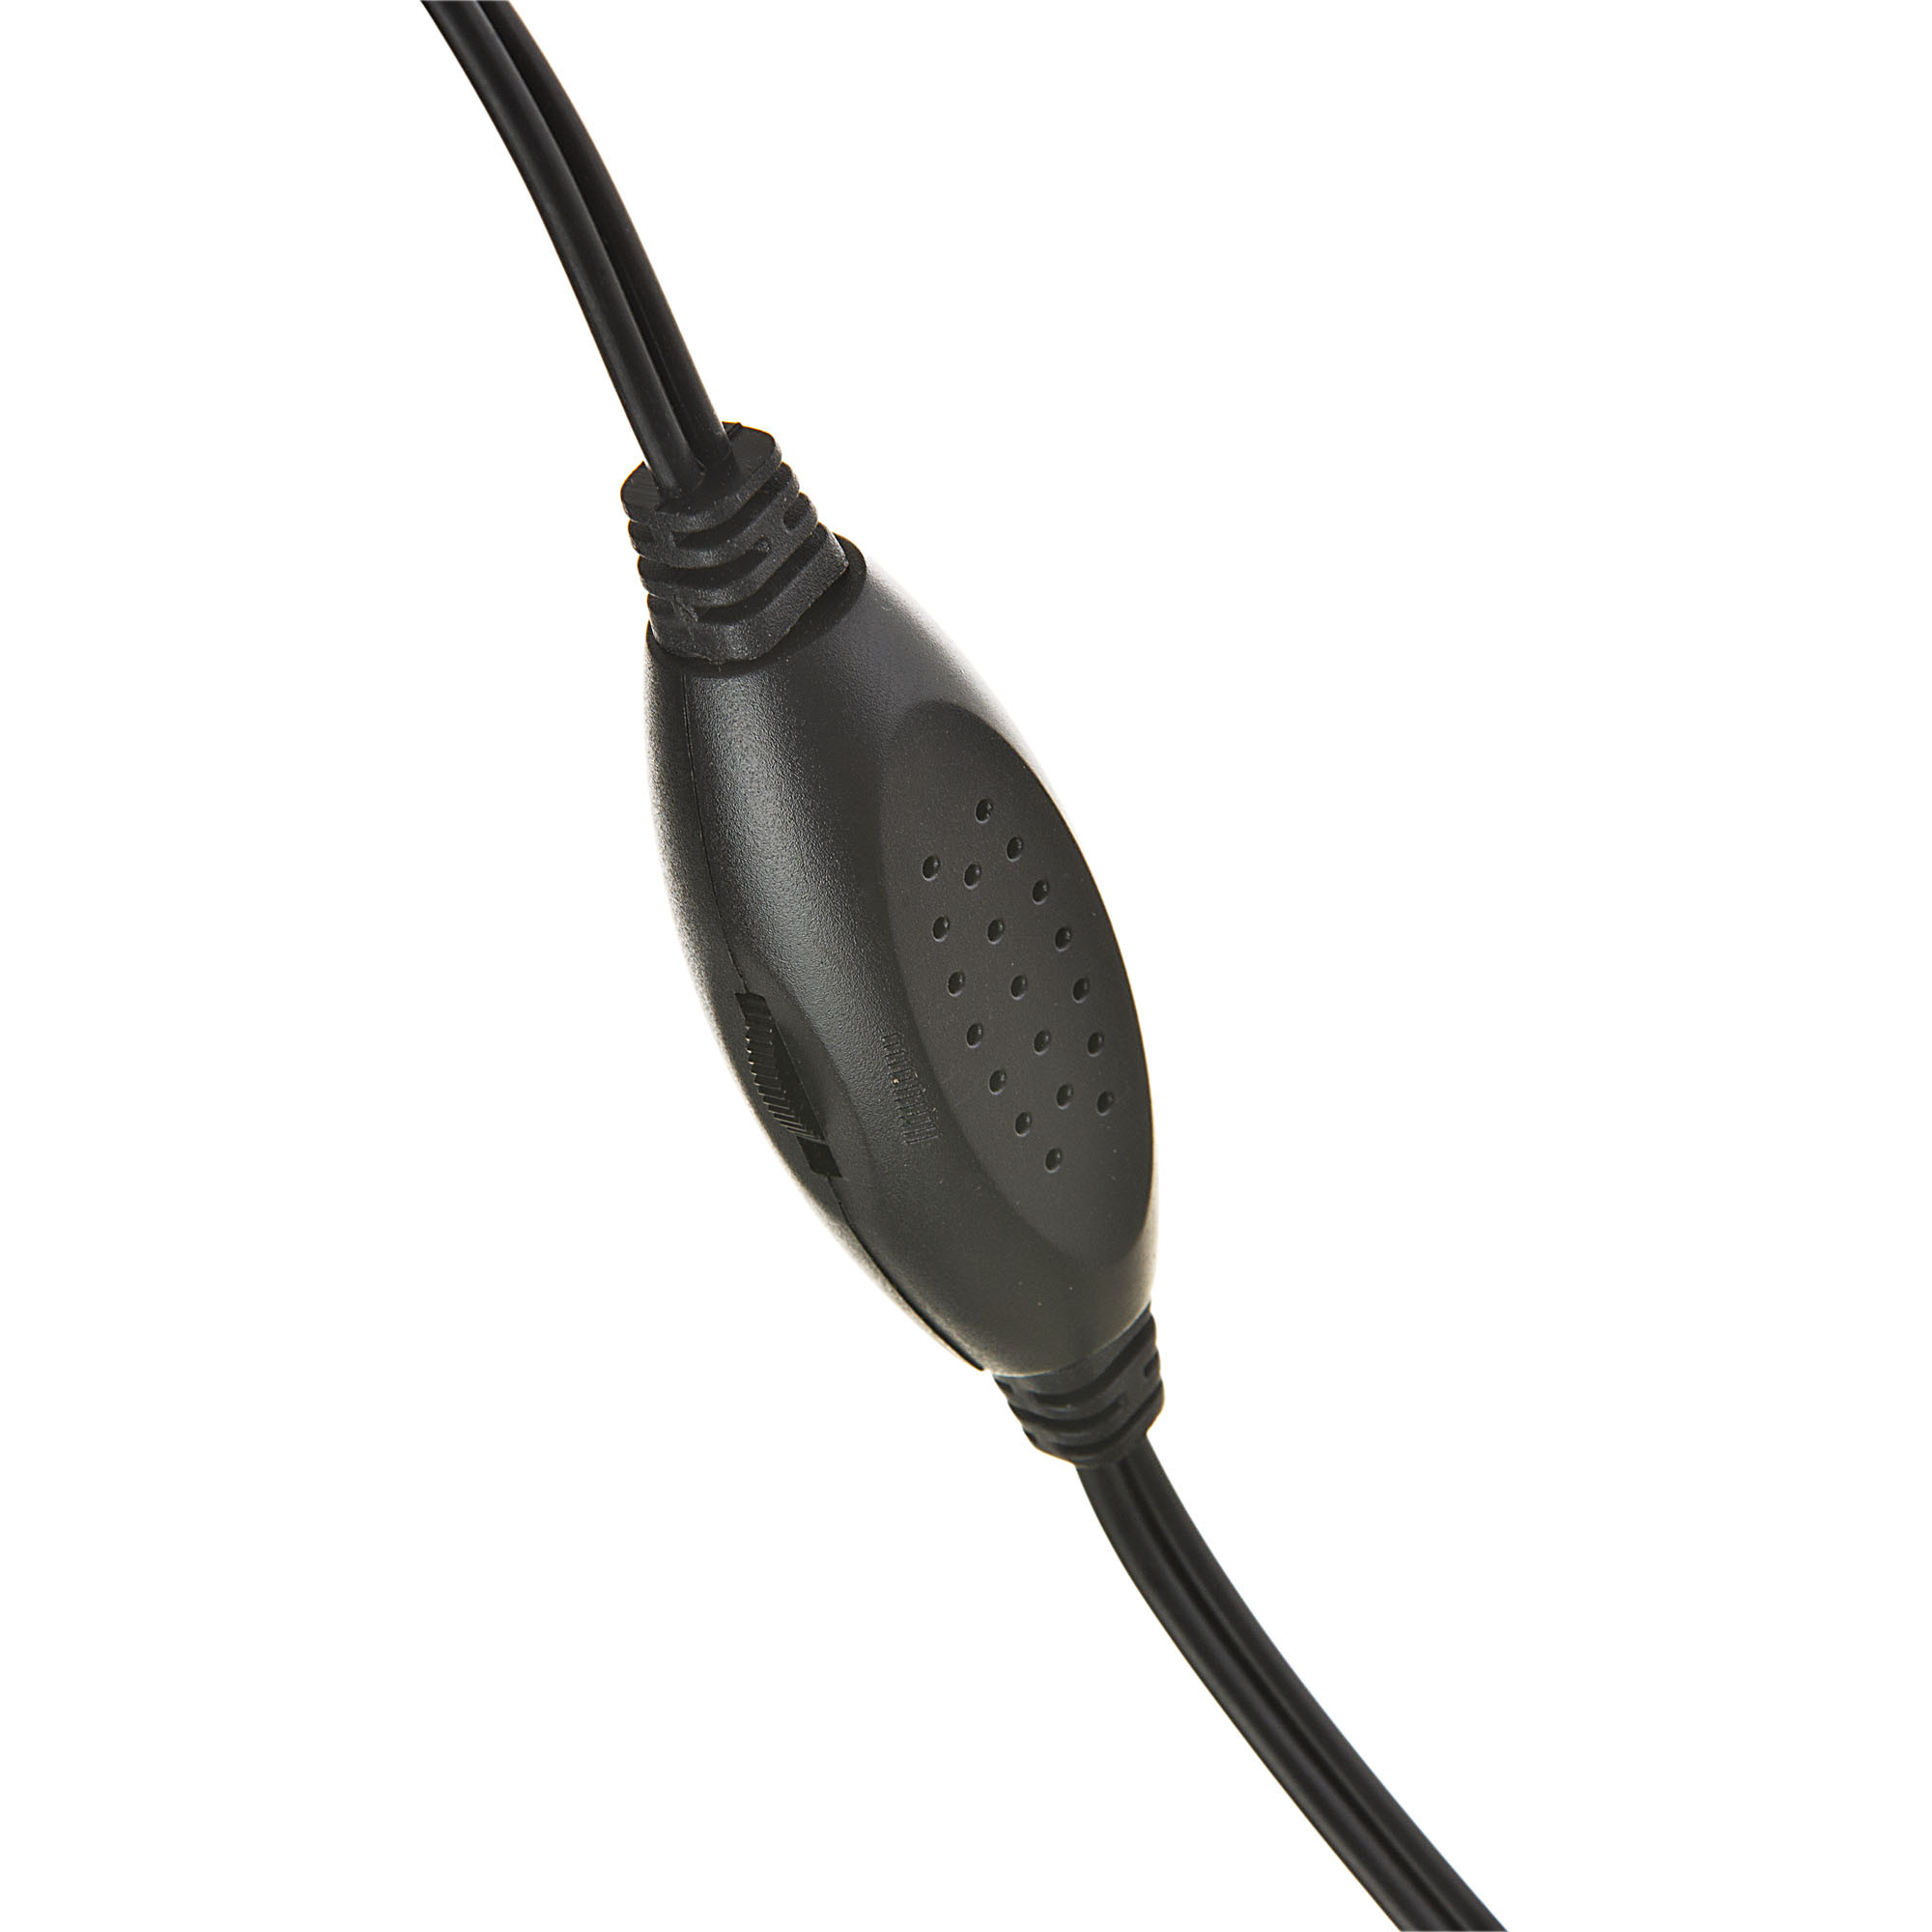 Parlantes para PC multimedia MINI puerto USB Jack 3.5mm Cable de 1